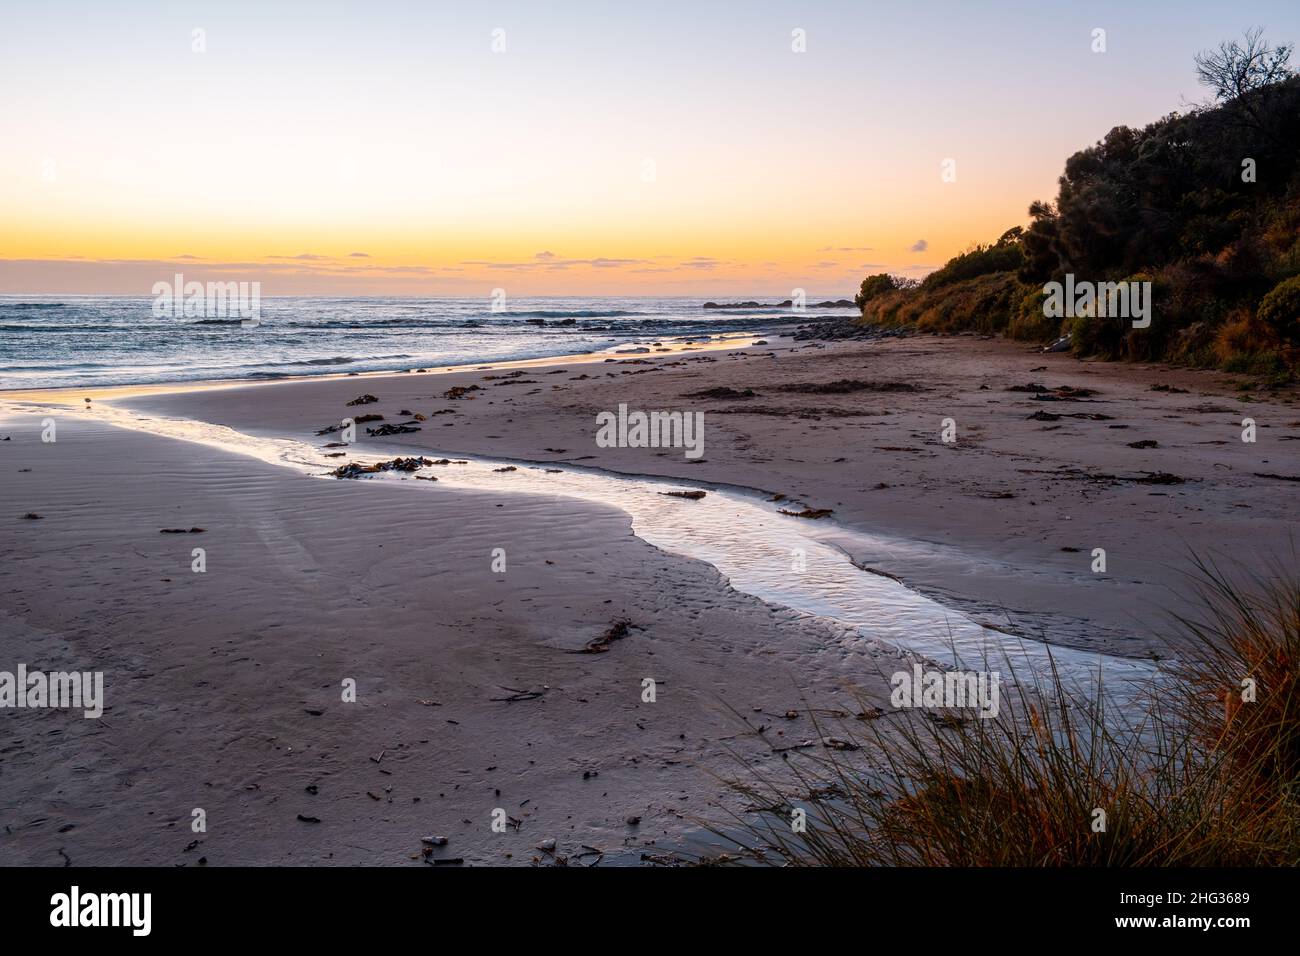 Scenic sunset over ocean beach in Australia Stock Photo